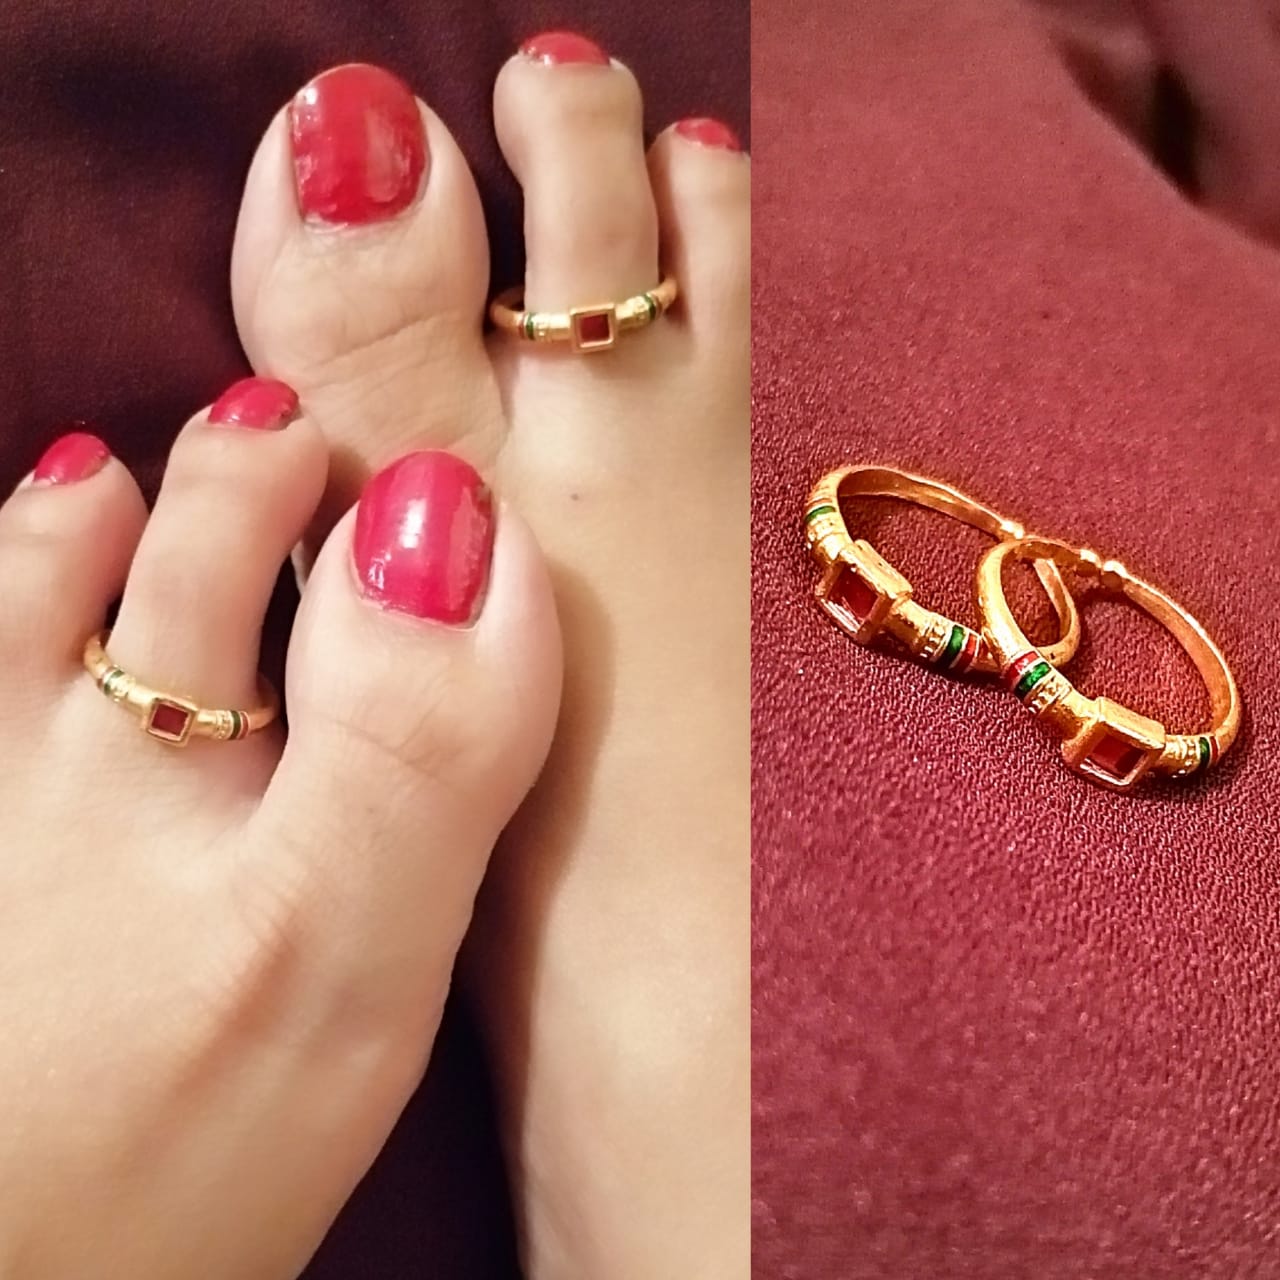 Gold toe-rings - ABDESIGNS - 3074985